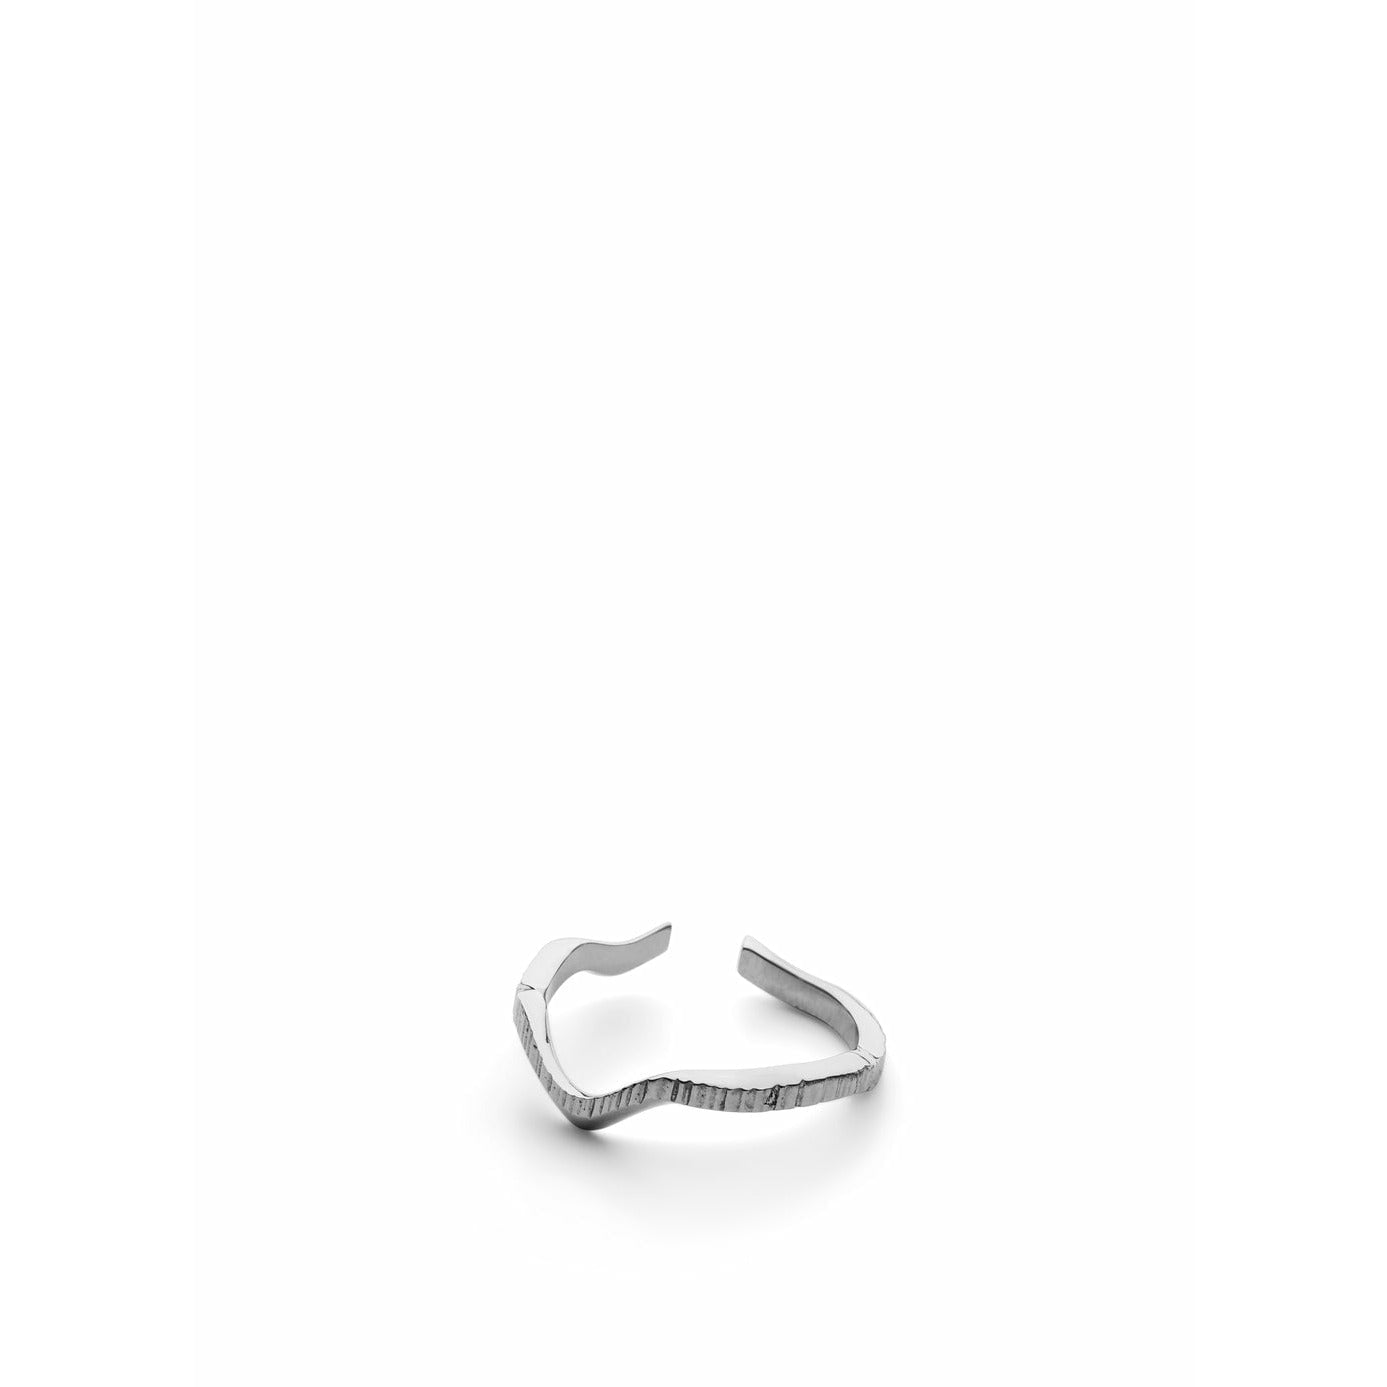 Skultuna Chêne Ring Mała polerowana stal, Ø1,6 cm